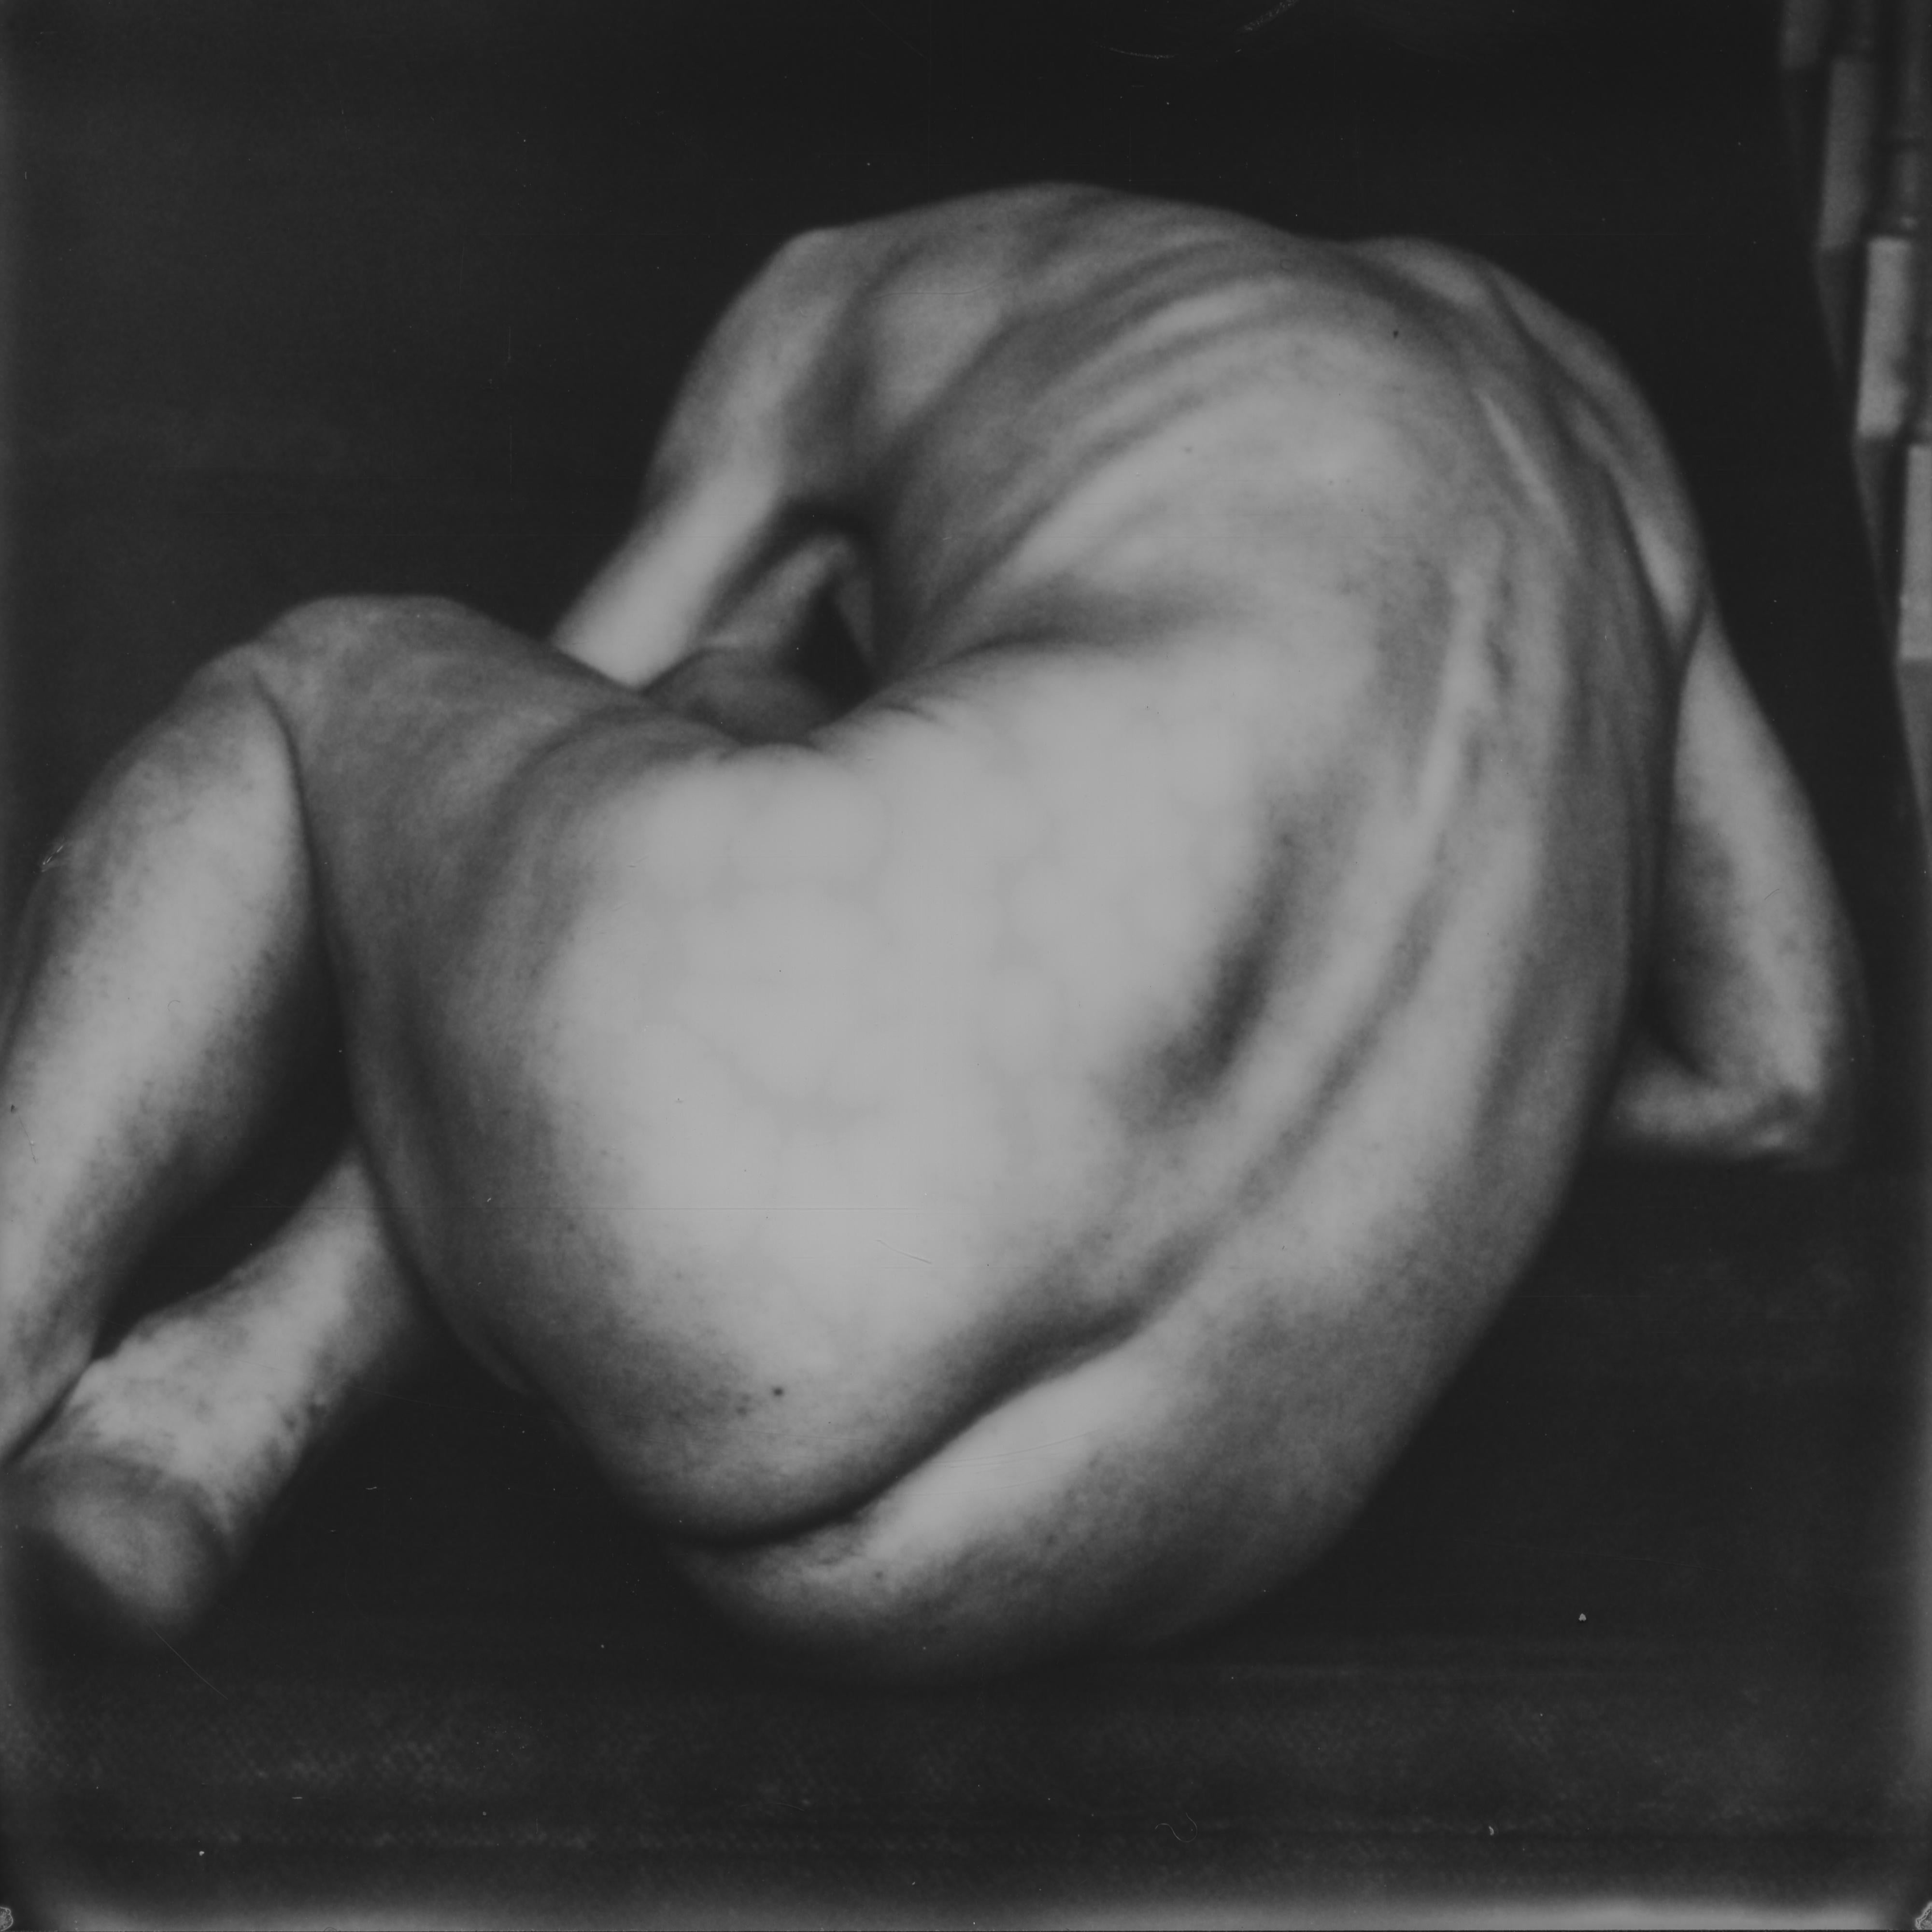 Kirsten Thys van den Audenaerde Nude Photograph - These days - Contemporary, Nude, Men, Polaroid, 21st Century